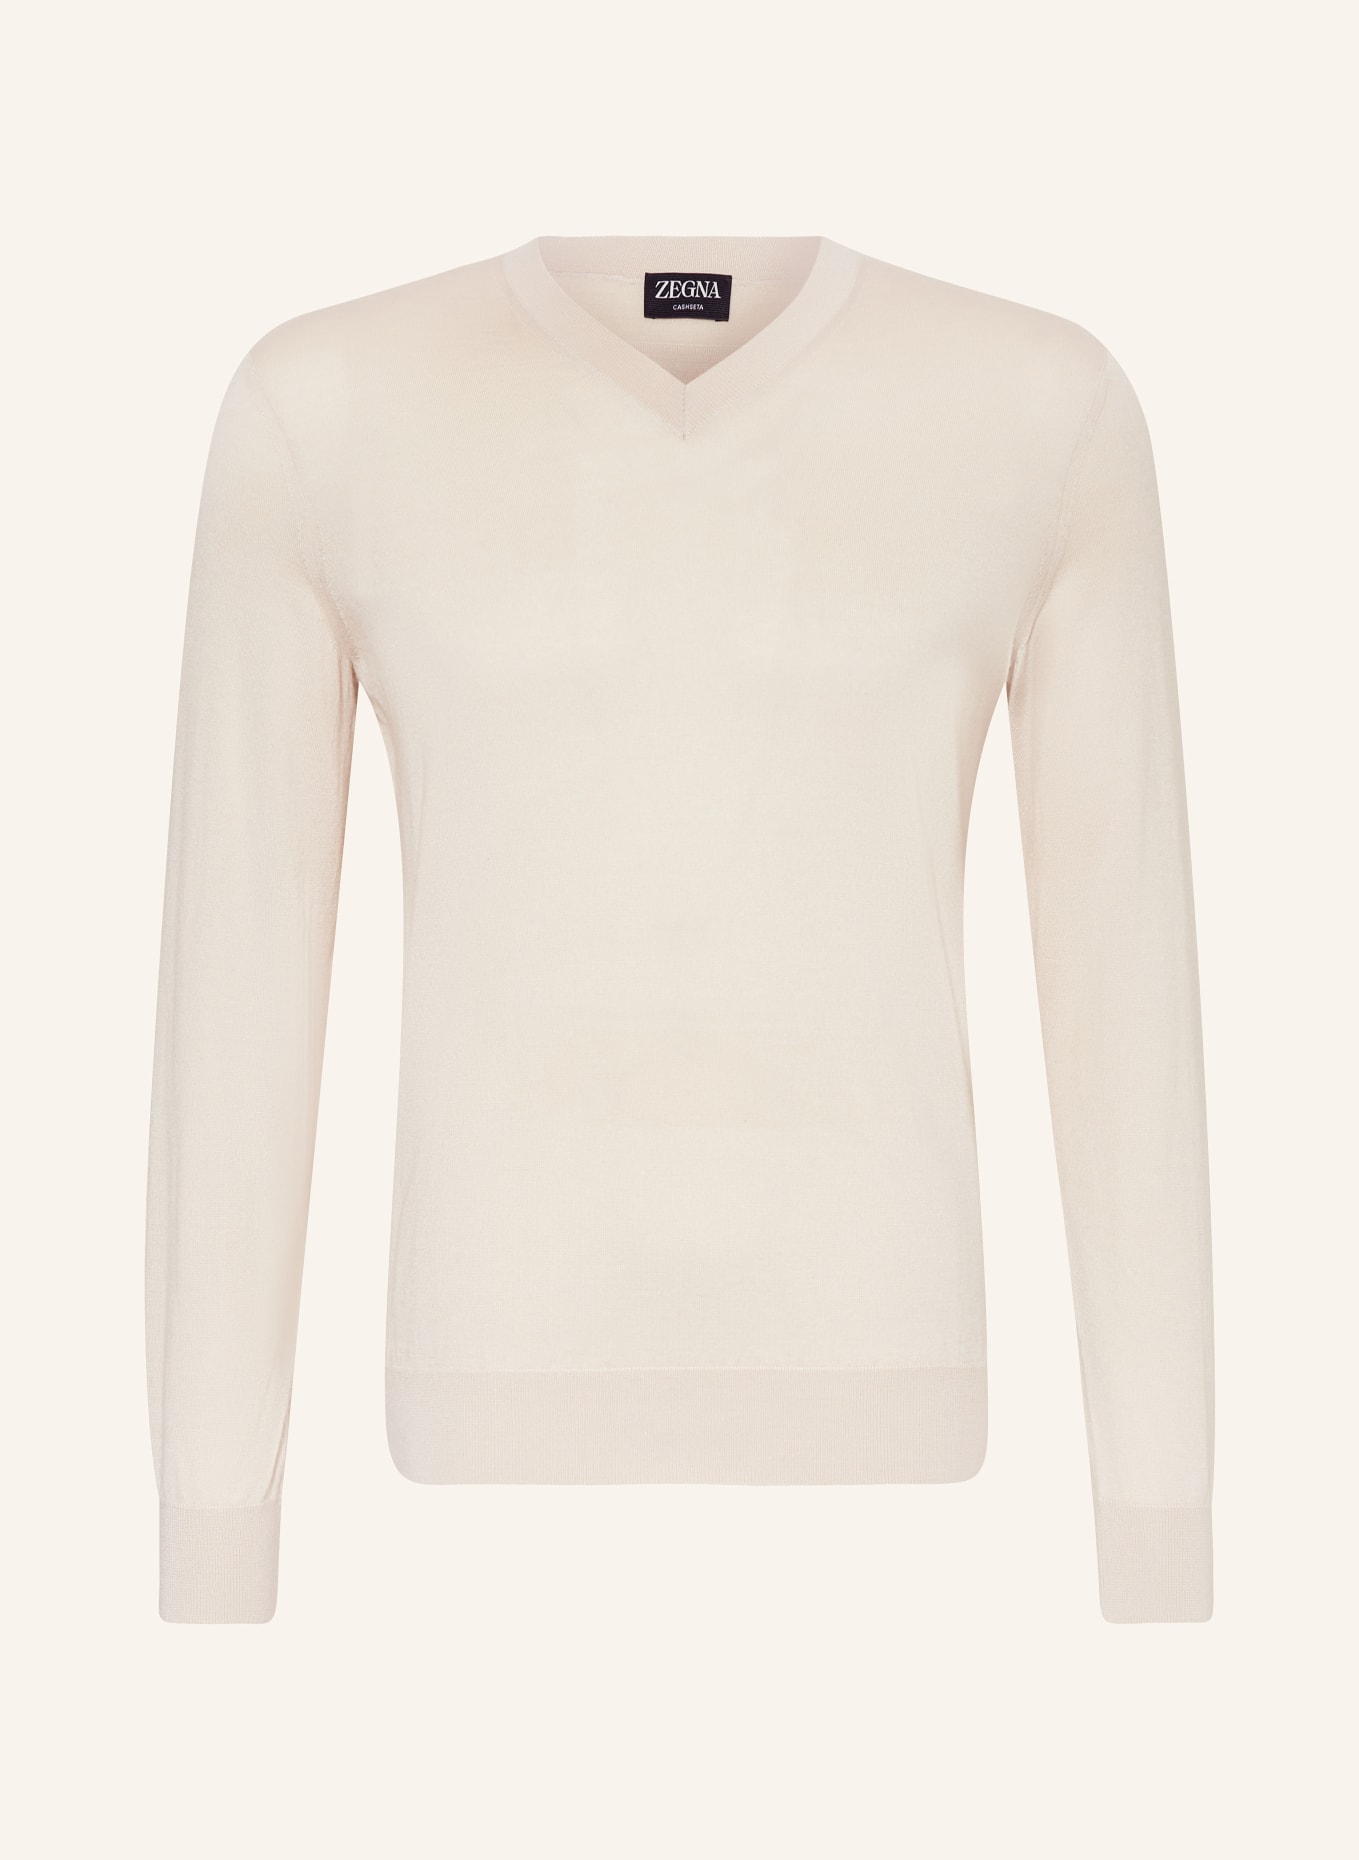 ZEGNA Cashmere-Pullover mit Seide, Farbe: BEIGE (Bild 1)